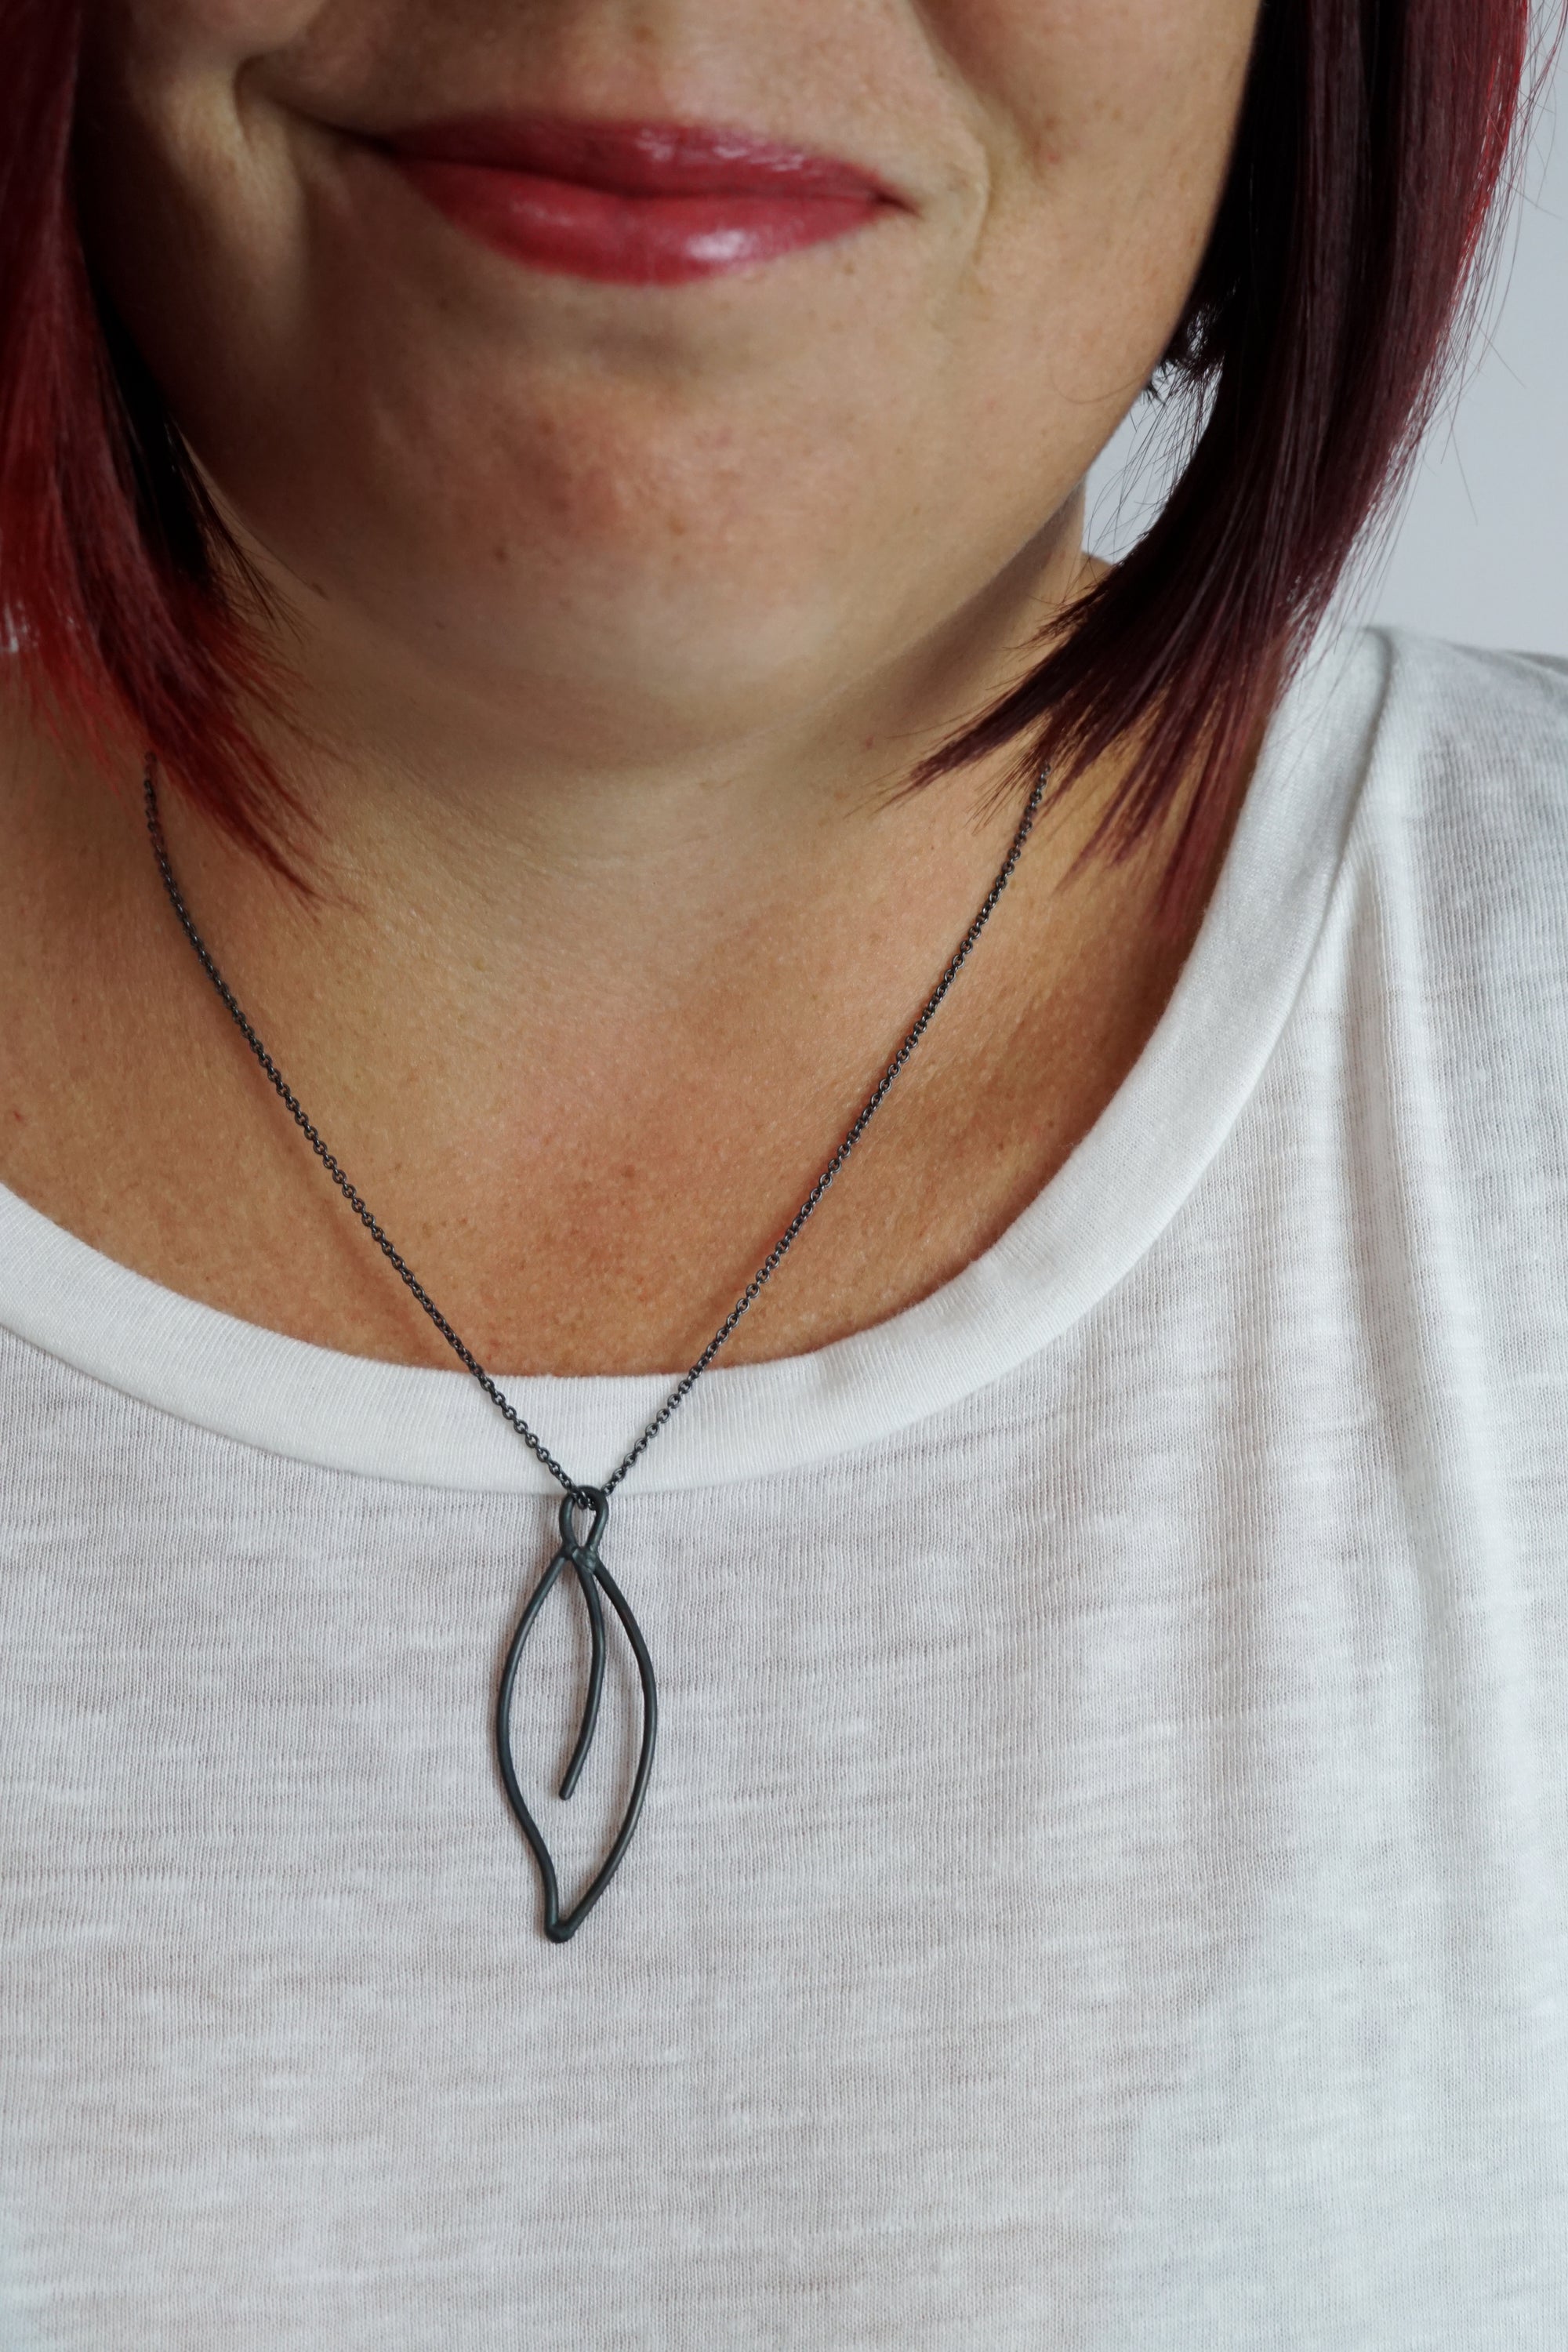 Replier Necklace in black steel, silver, or bronze